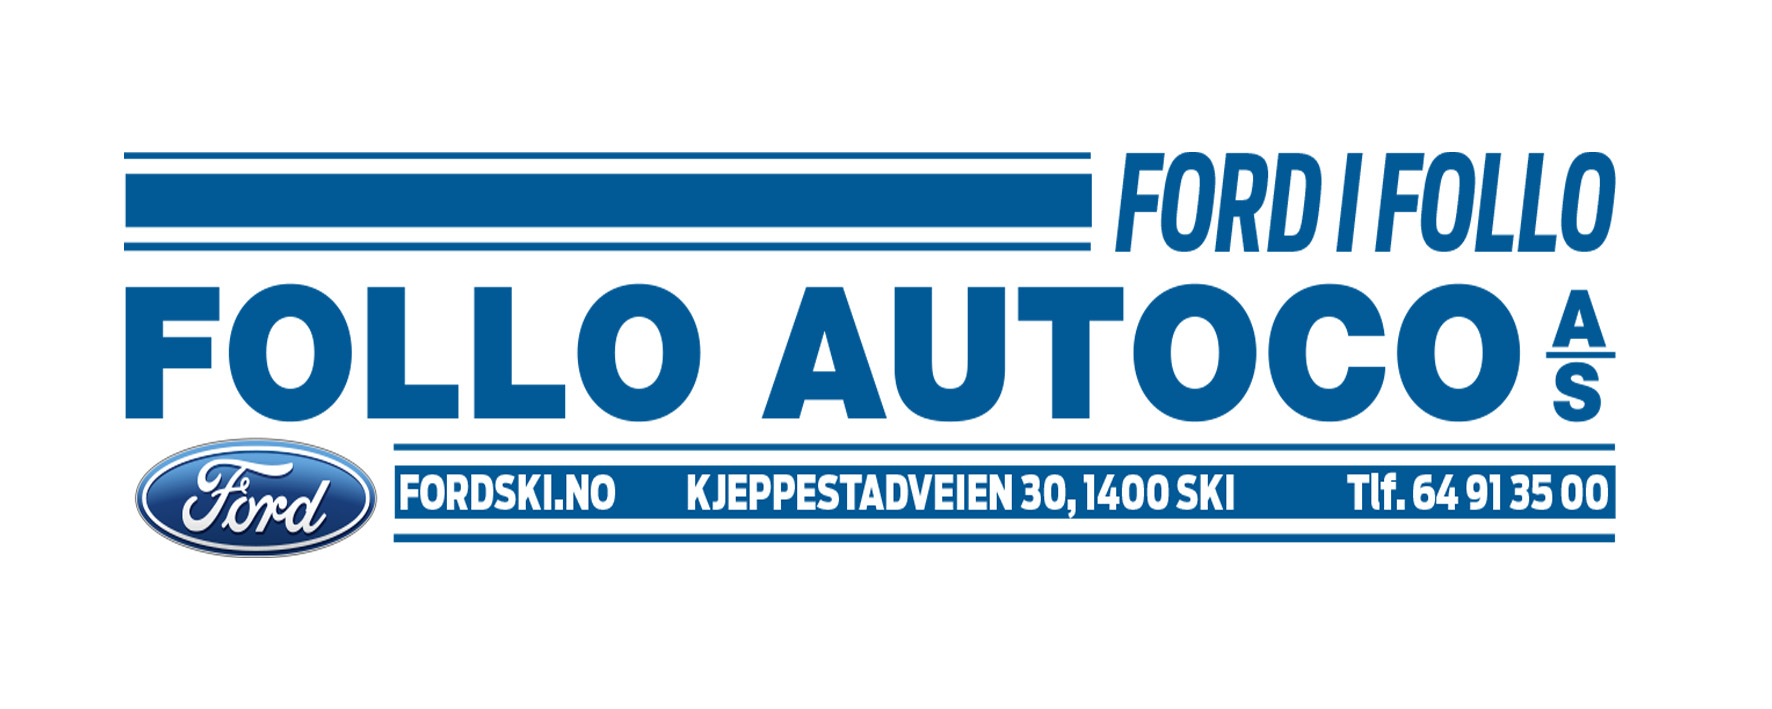 follo-autoco-logo-2015